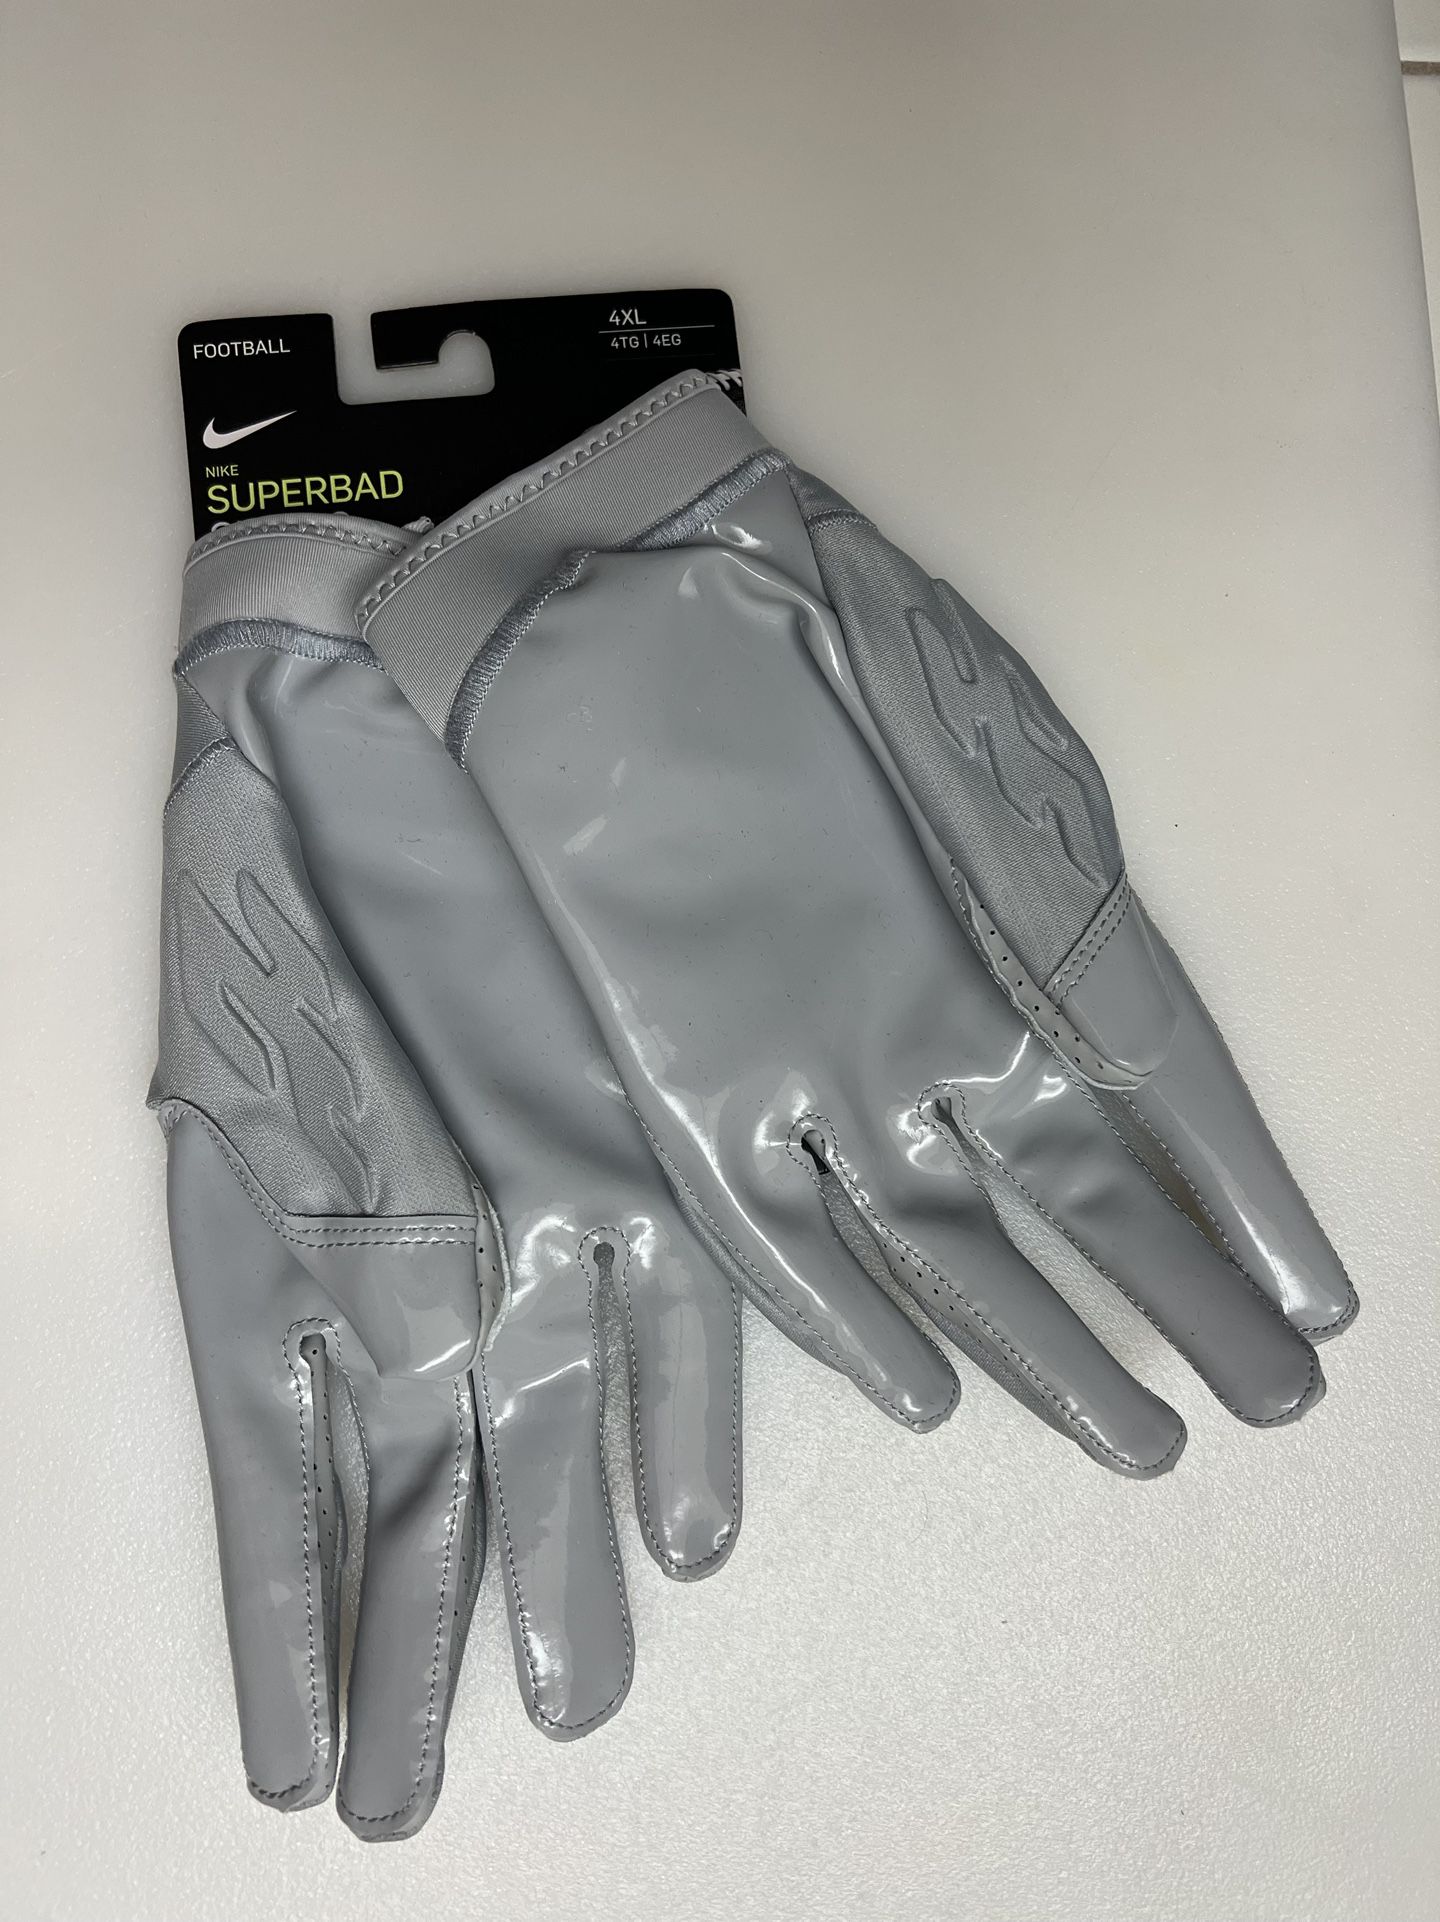 Men's Nike Superbad Football Jordan Receiver Gloves Black DM0052-091 Size  XXXL for Sale in Bakersfield, CA - OfferUp